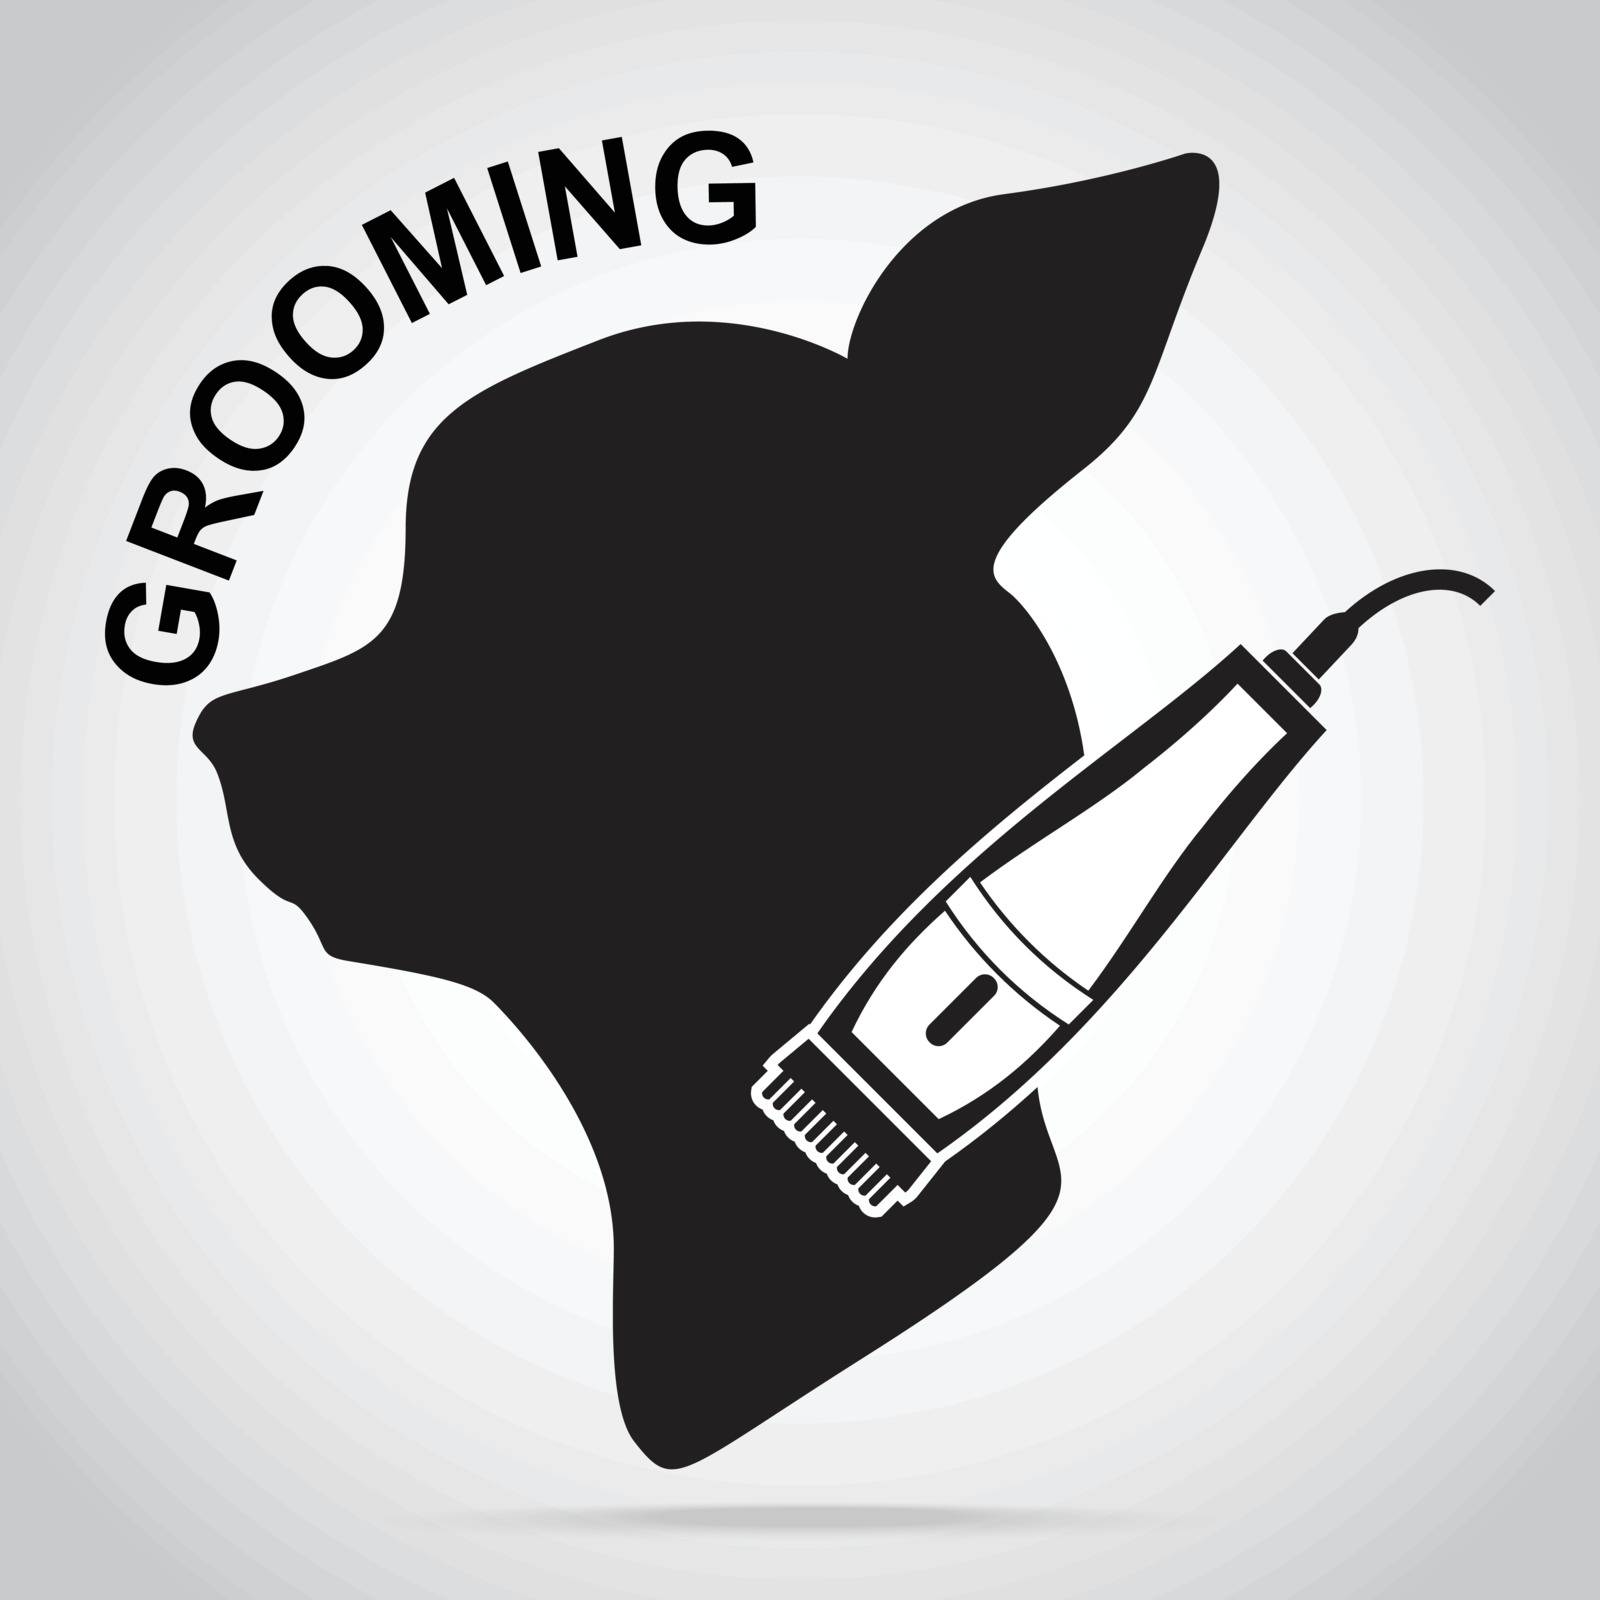 Dog grooming salon icon. Pet beauty salon sign illustration by Kheat